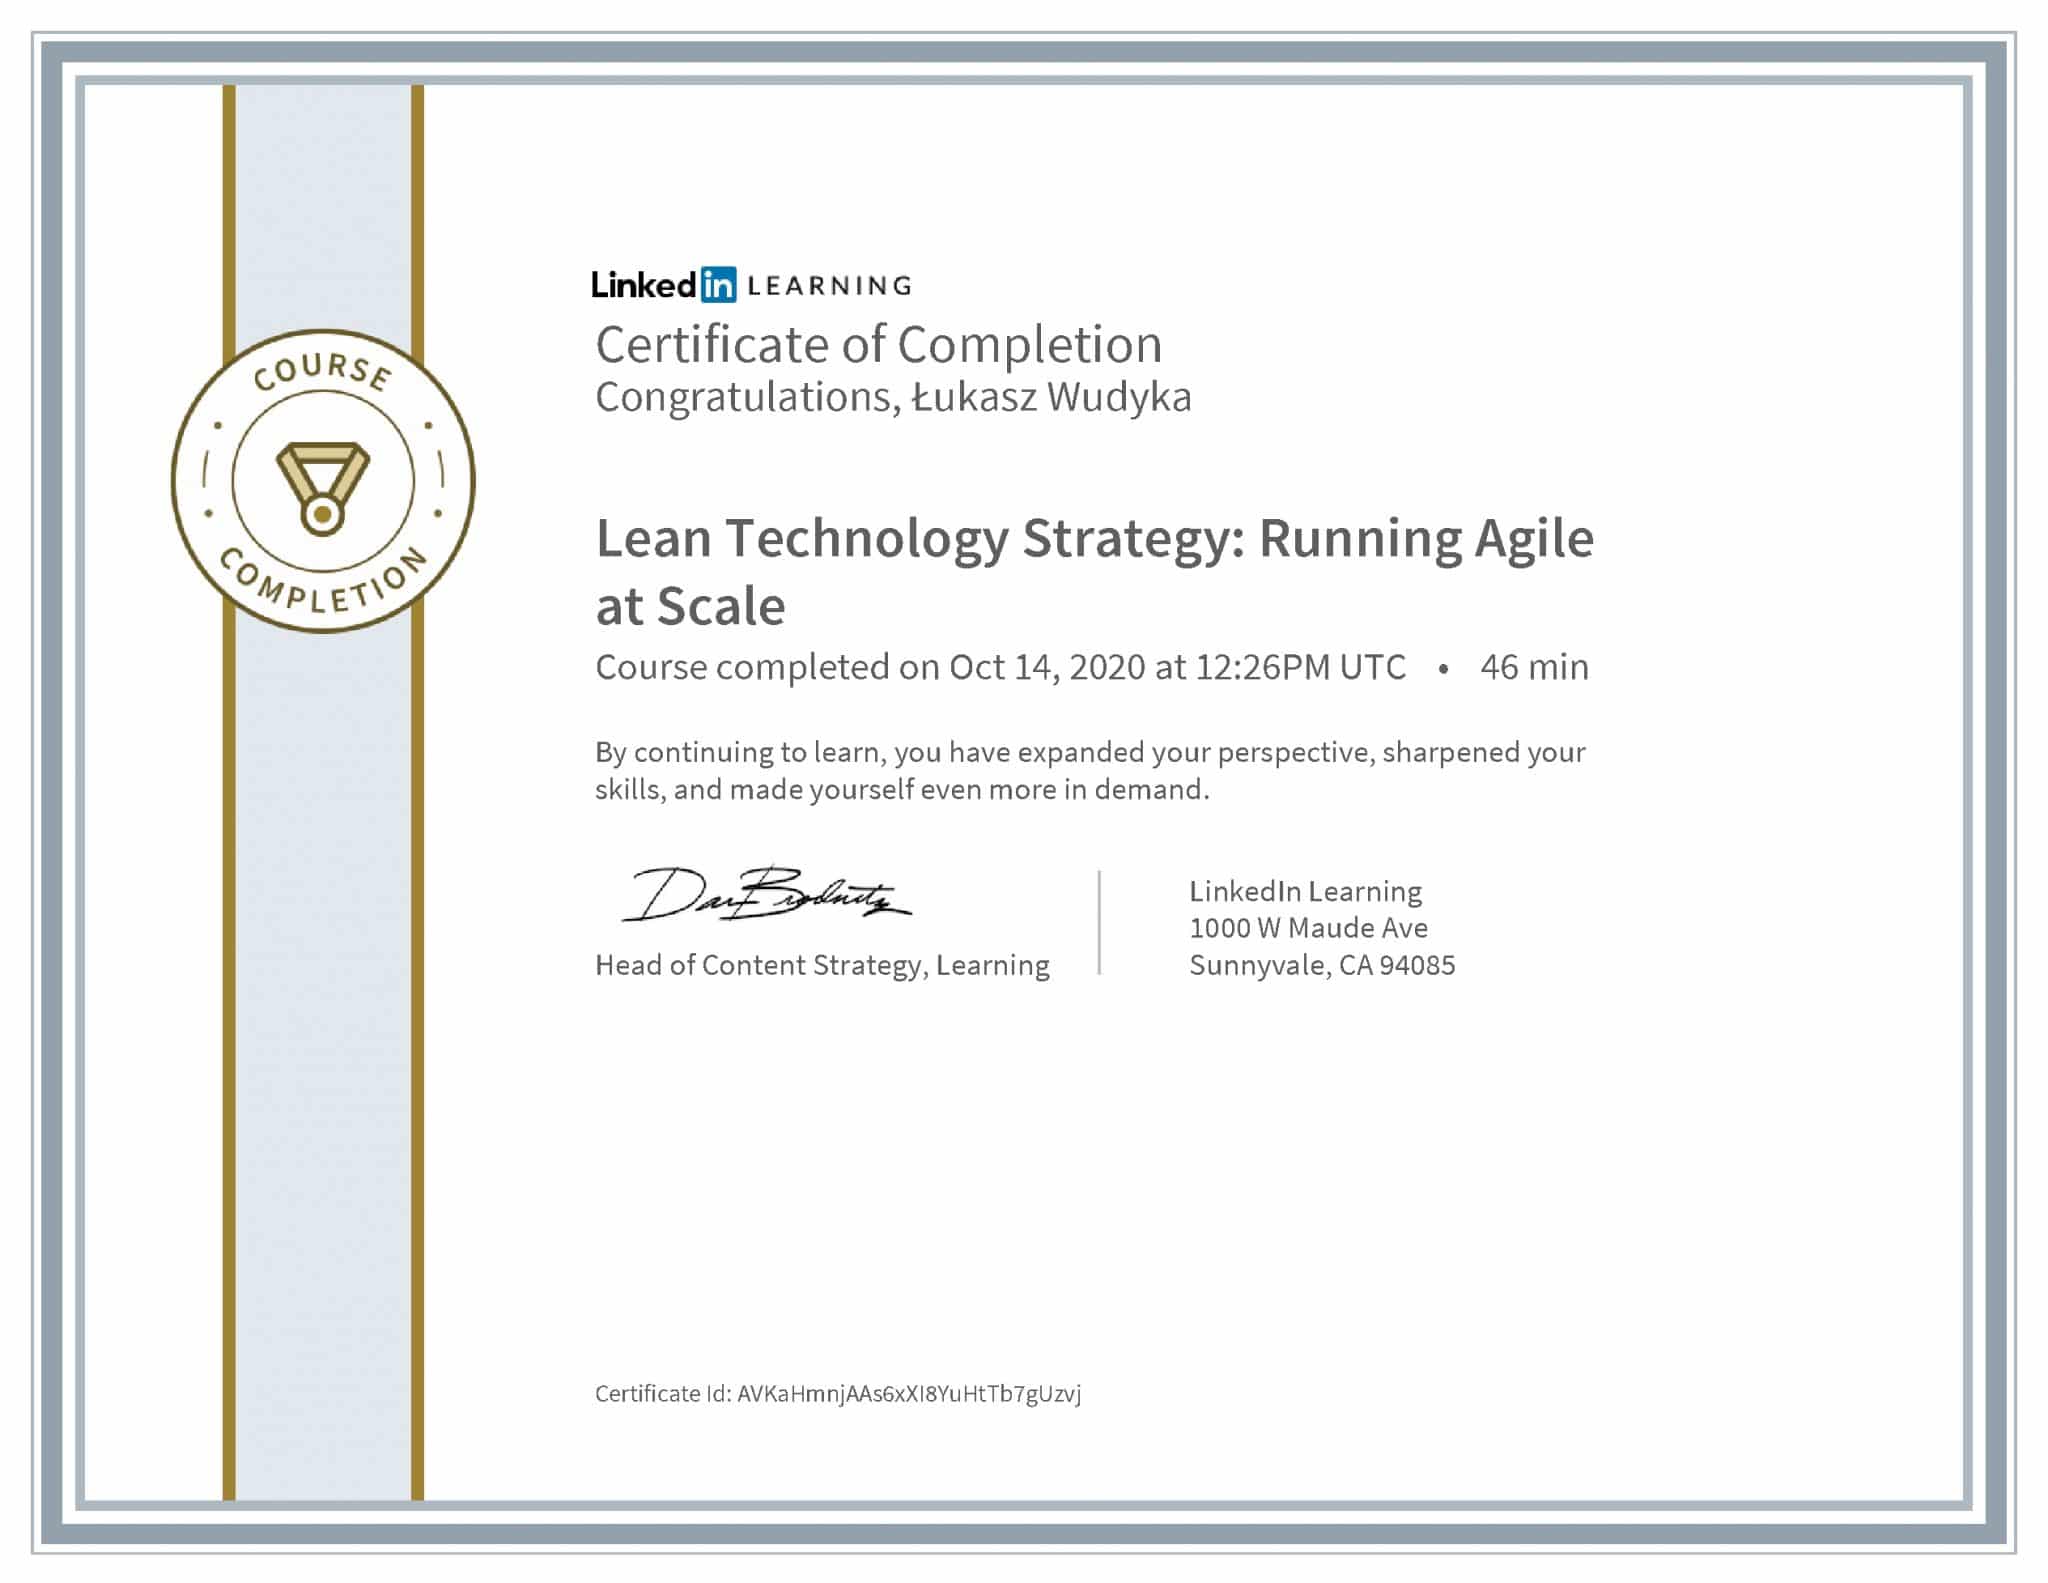 Łukasz Wudyka certyfikat LinkedIn Lean Technology Strategy: Running Agile at Scale